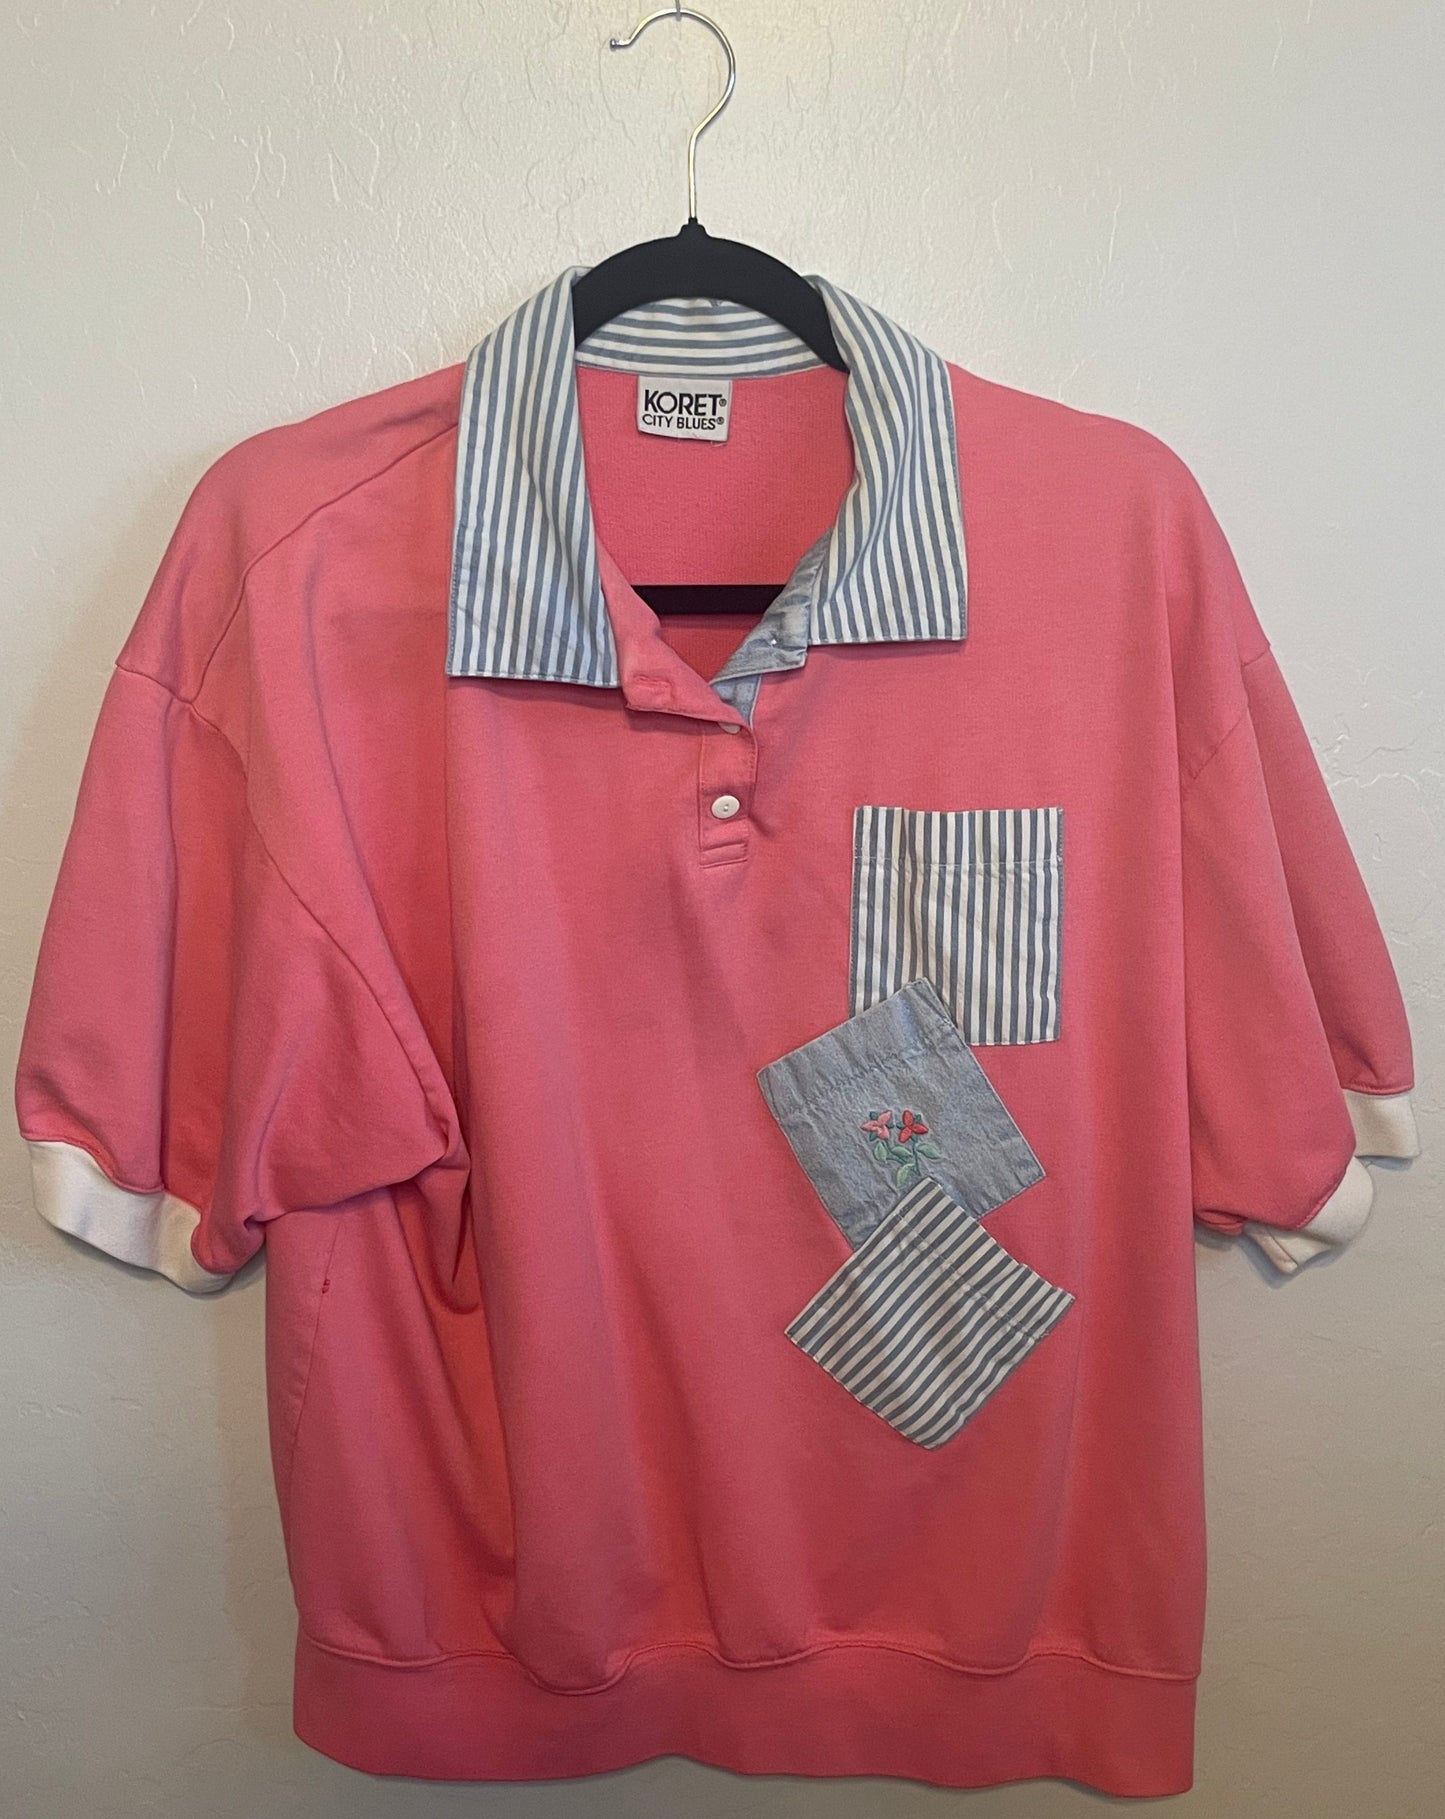 90's light pink & denim shirt with pockets